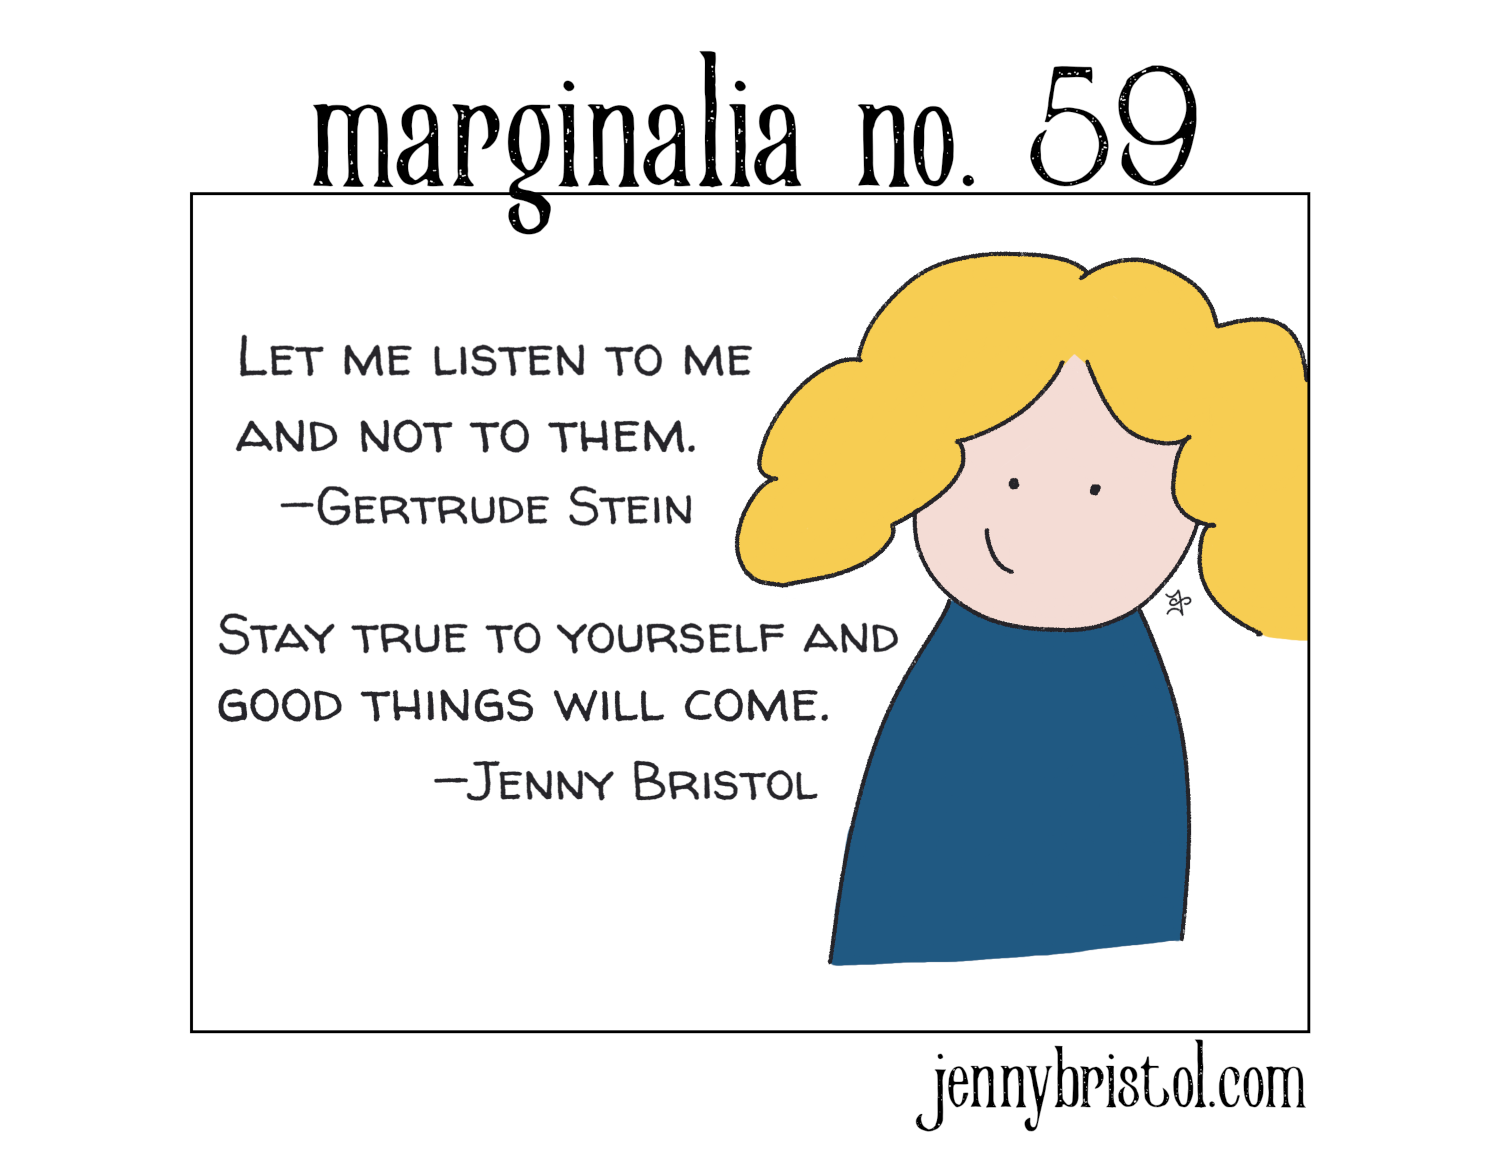 Marginalia No. 59 to post